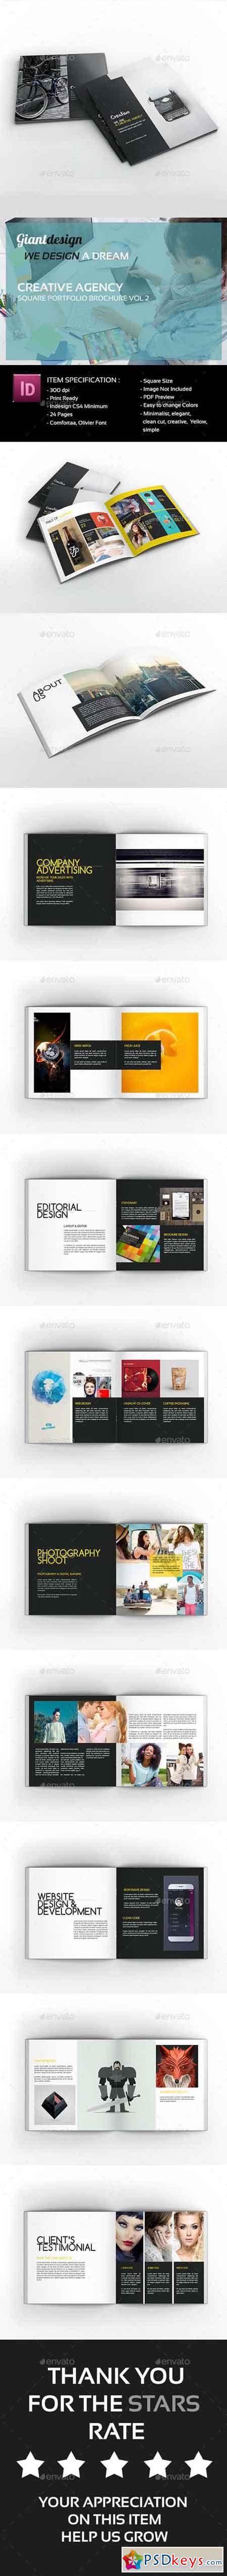 Creative Agency - Square Portfolio Brochure 20209482